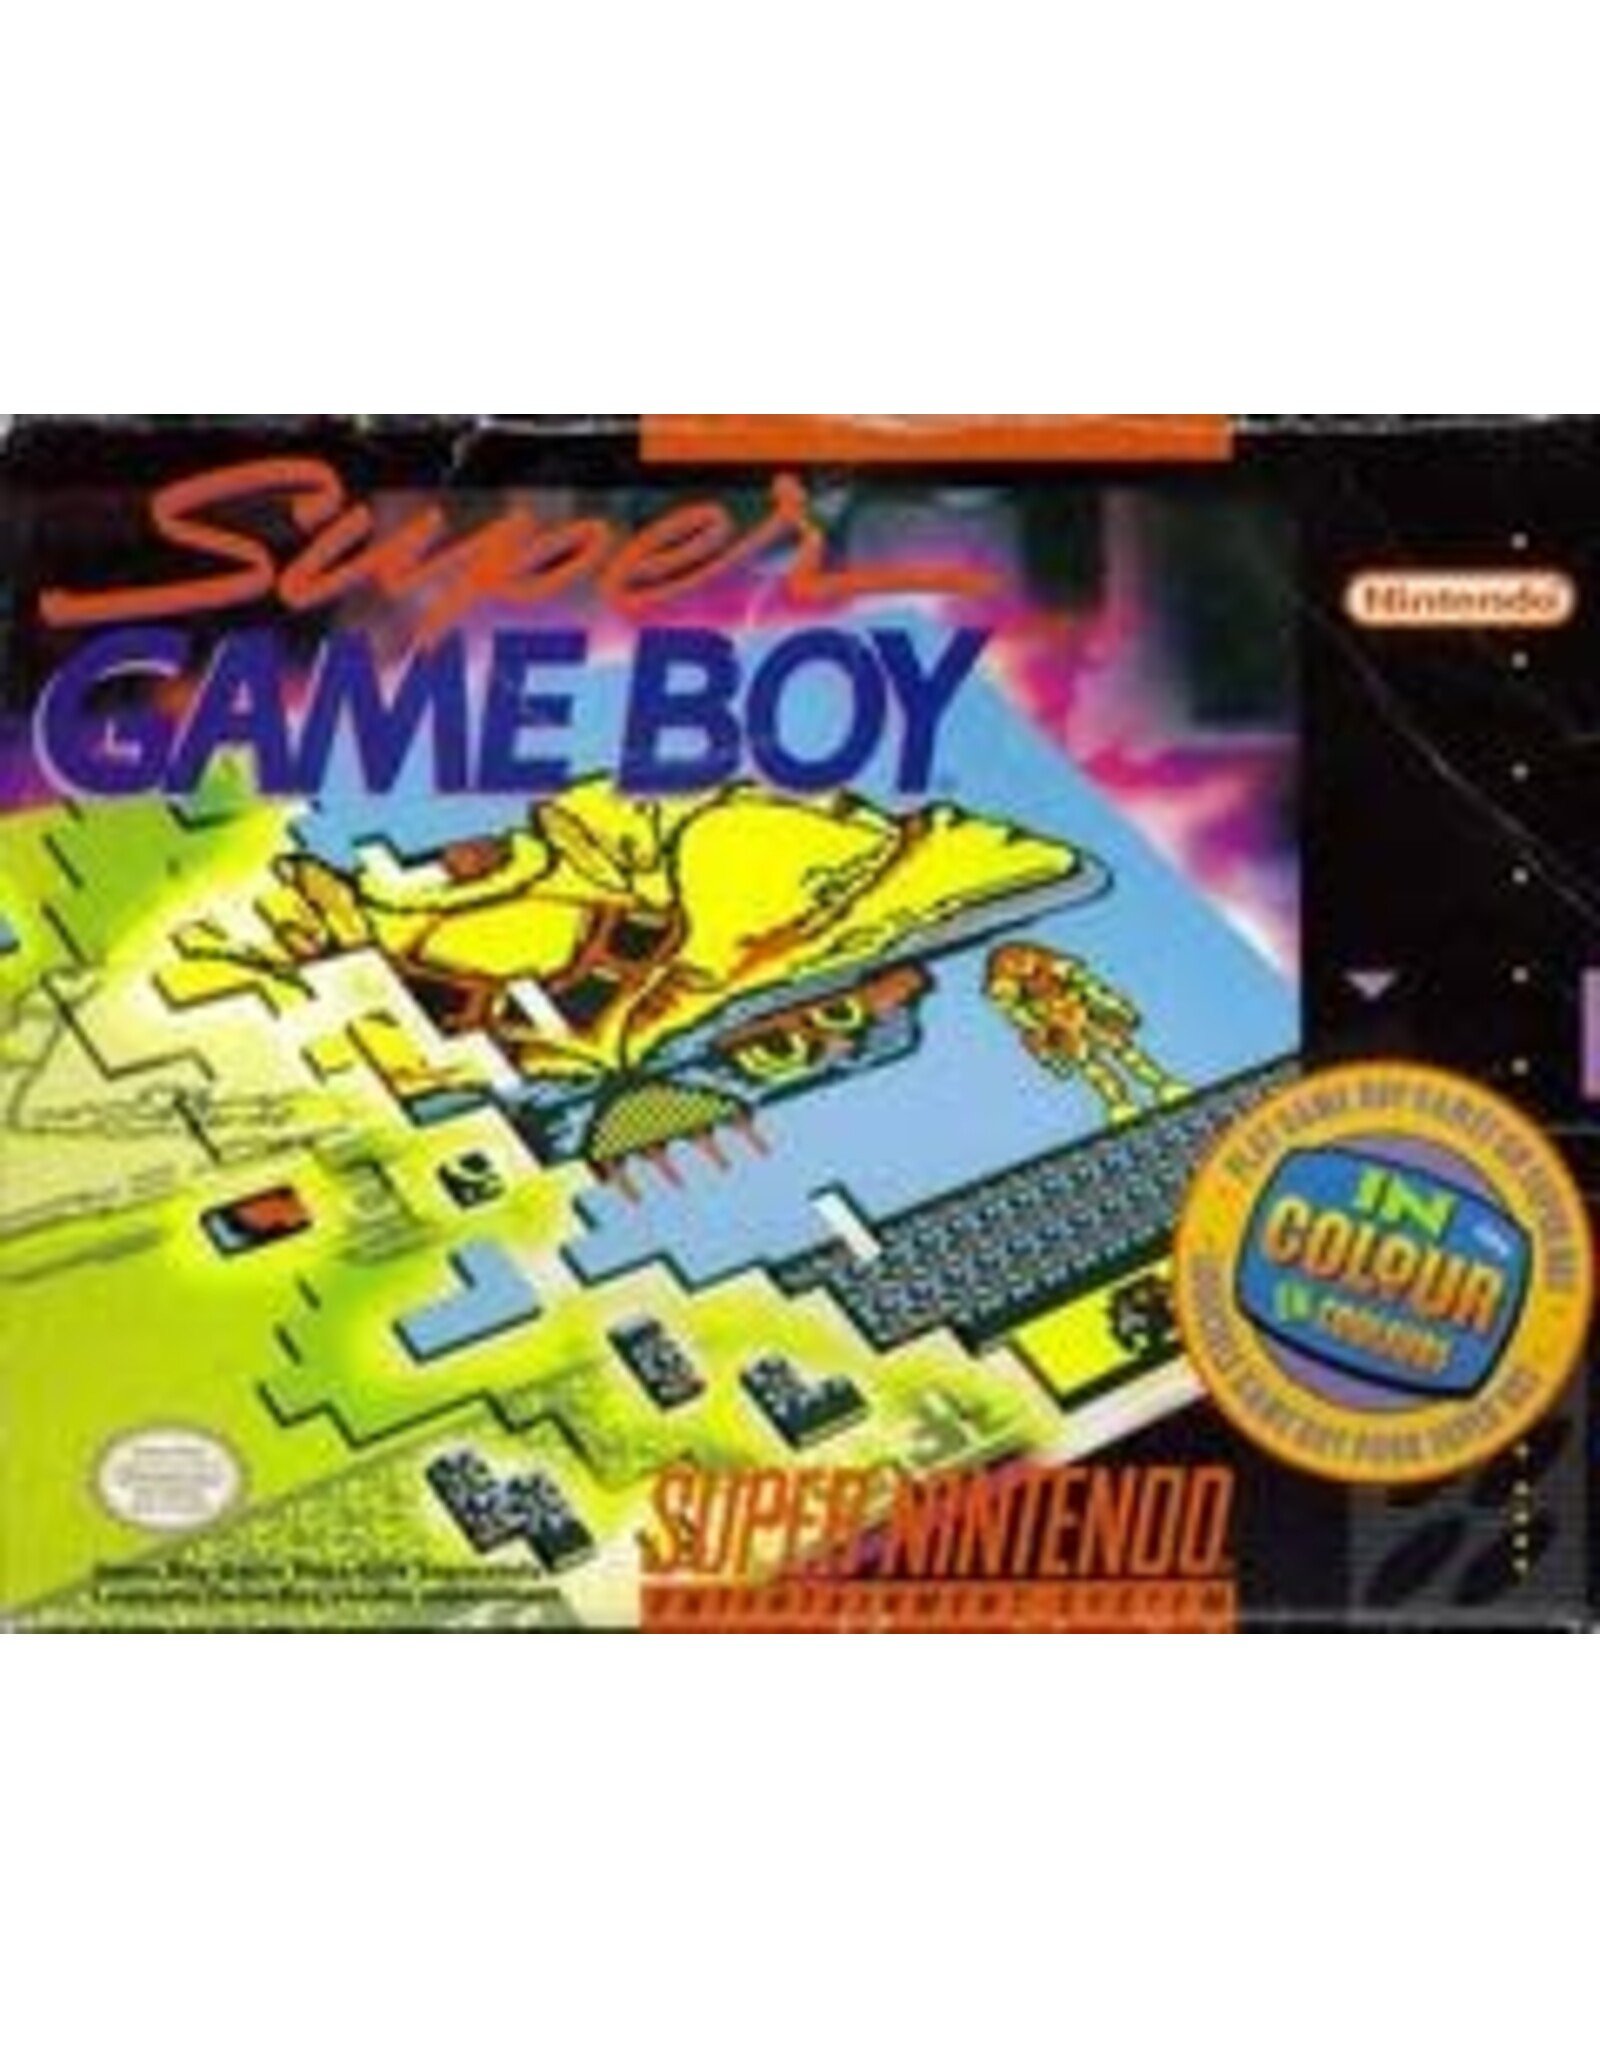 Super Nintendo Super Game Boy (CiB, Damaged Box)